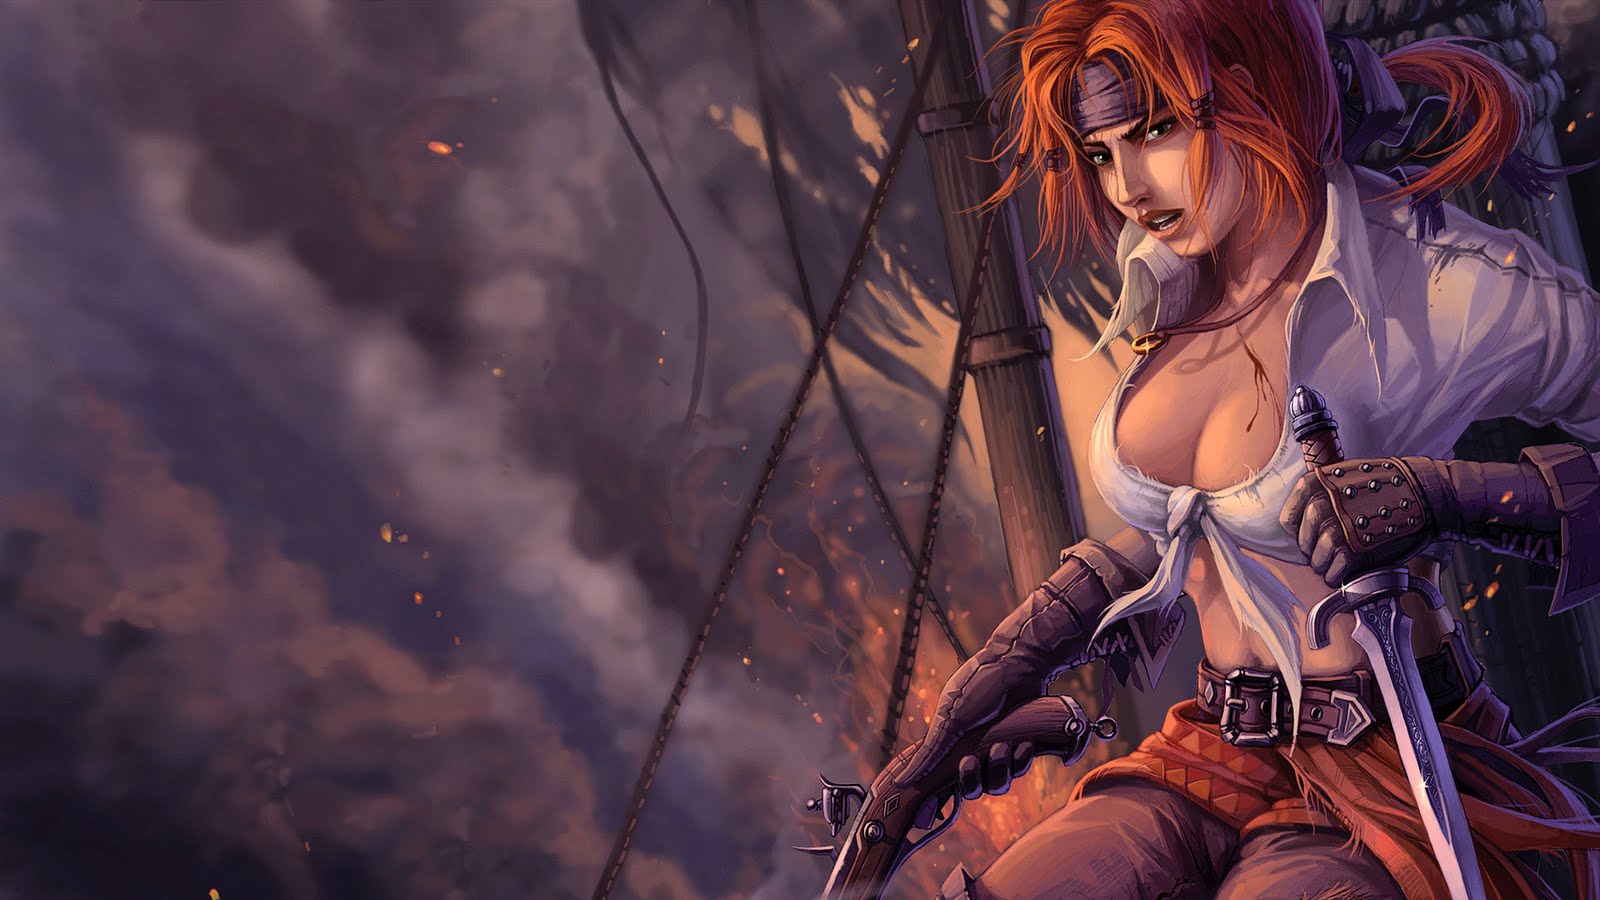 Redhead Pirate Girl Art Desktop